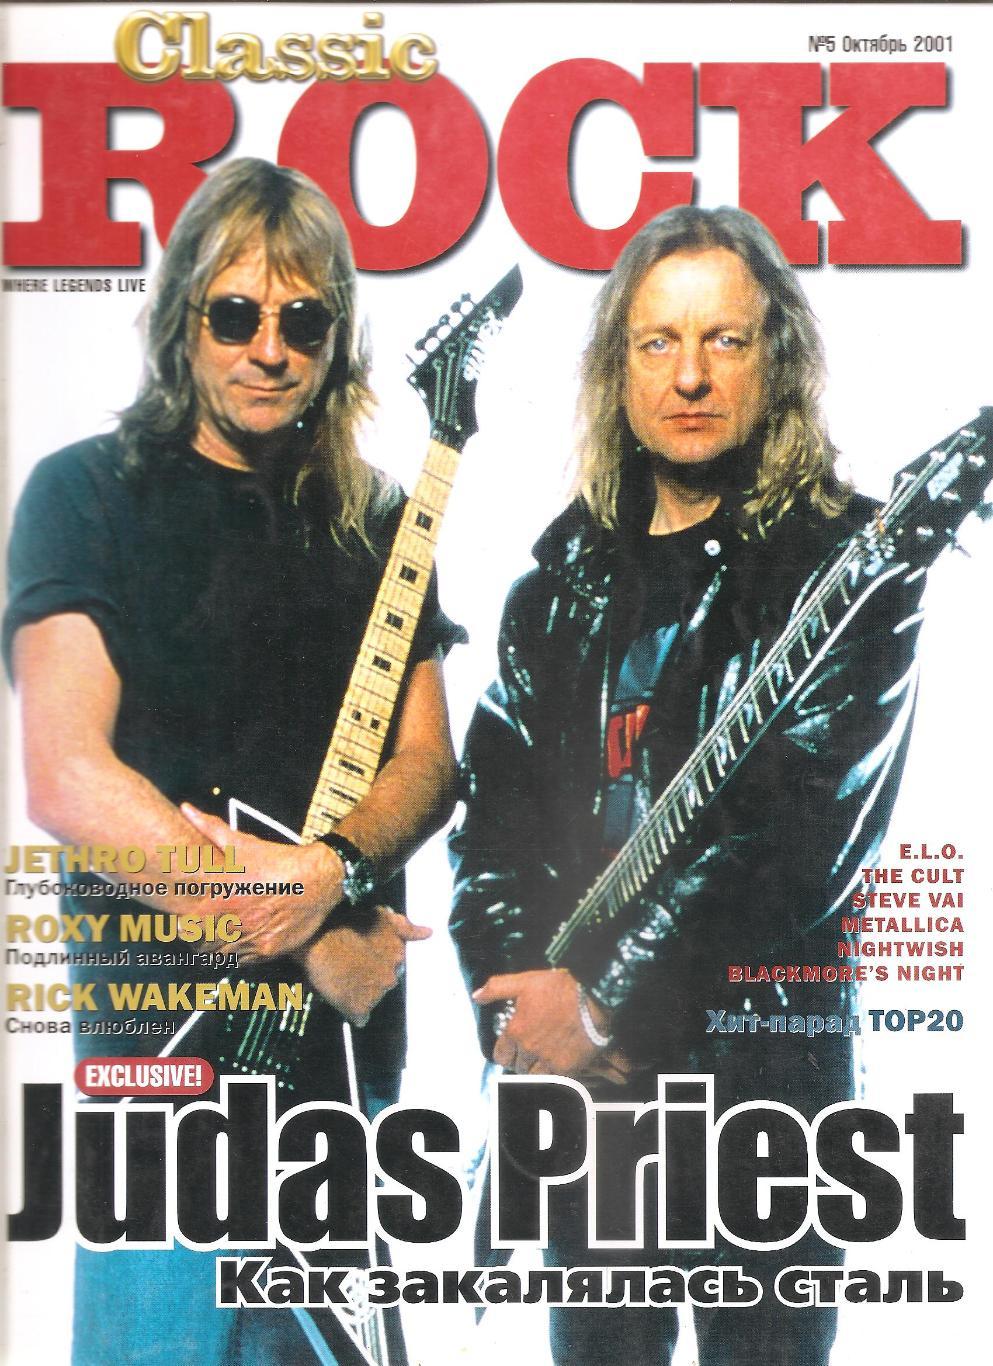 Журнал CLASSIC ROCK # 5 (5) октябрь 2001